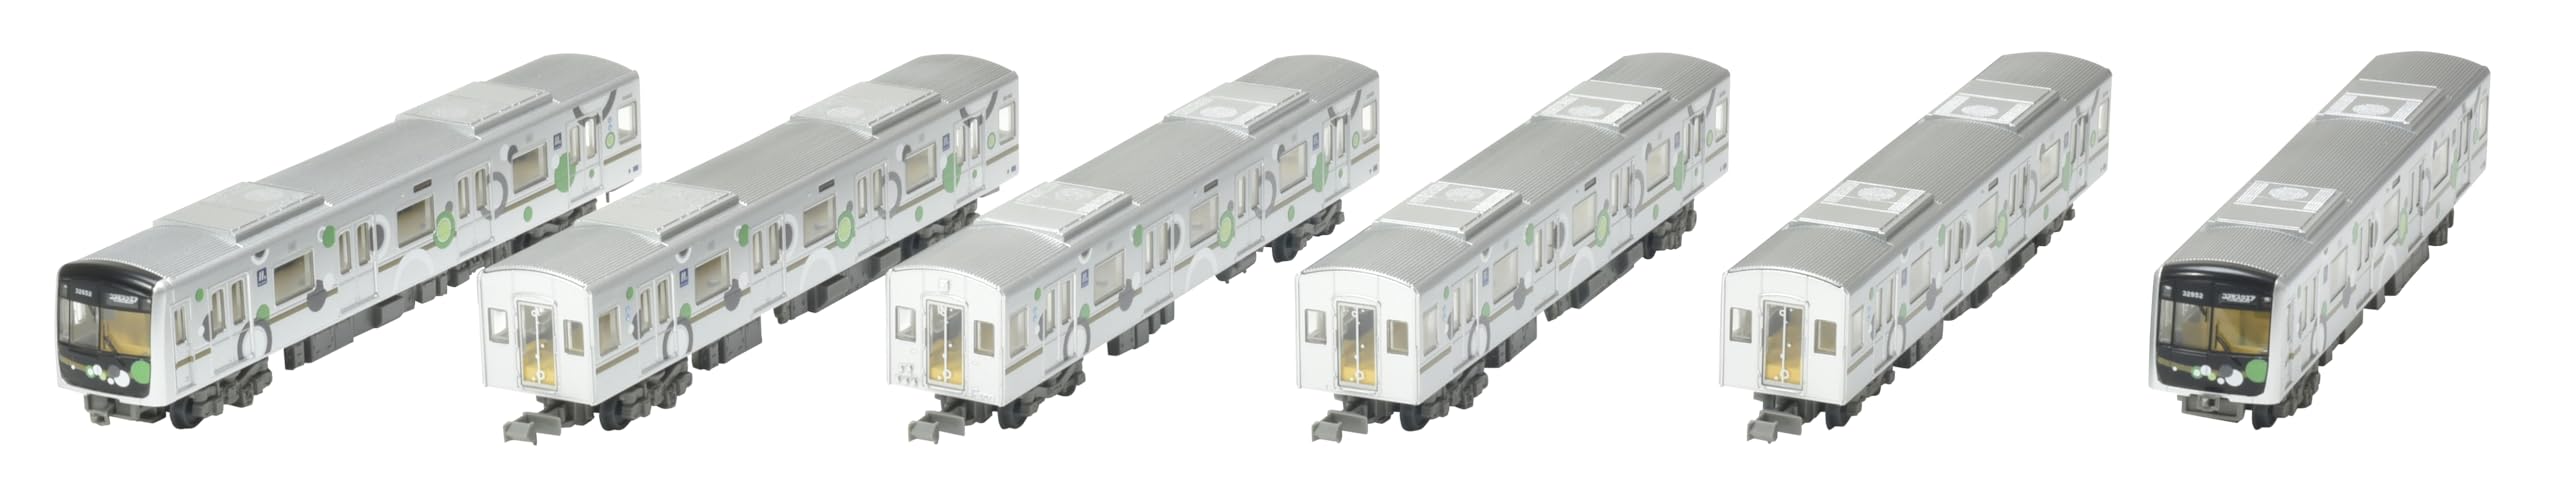 Tomytec Railway Collection Chuo Line 30000A Series 6-Car Diorama Set Osakametro